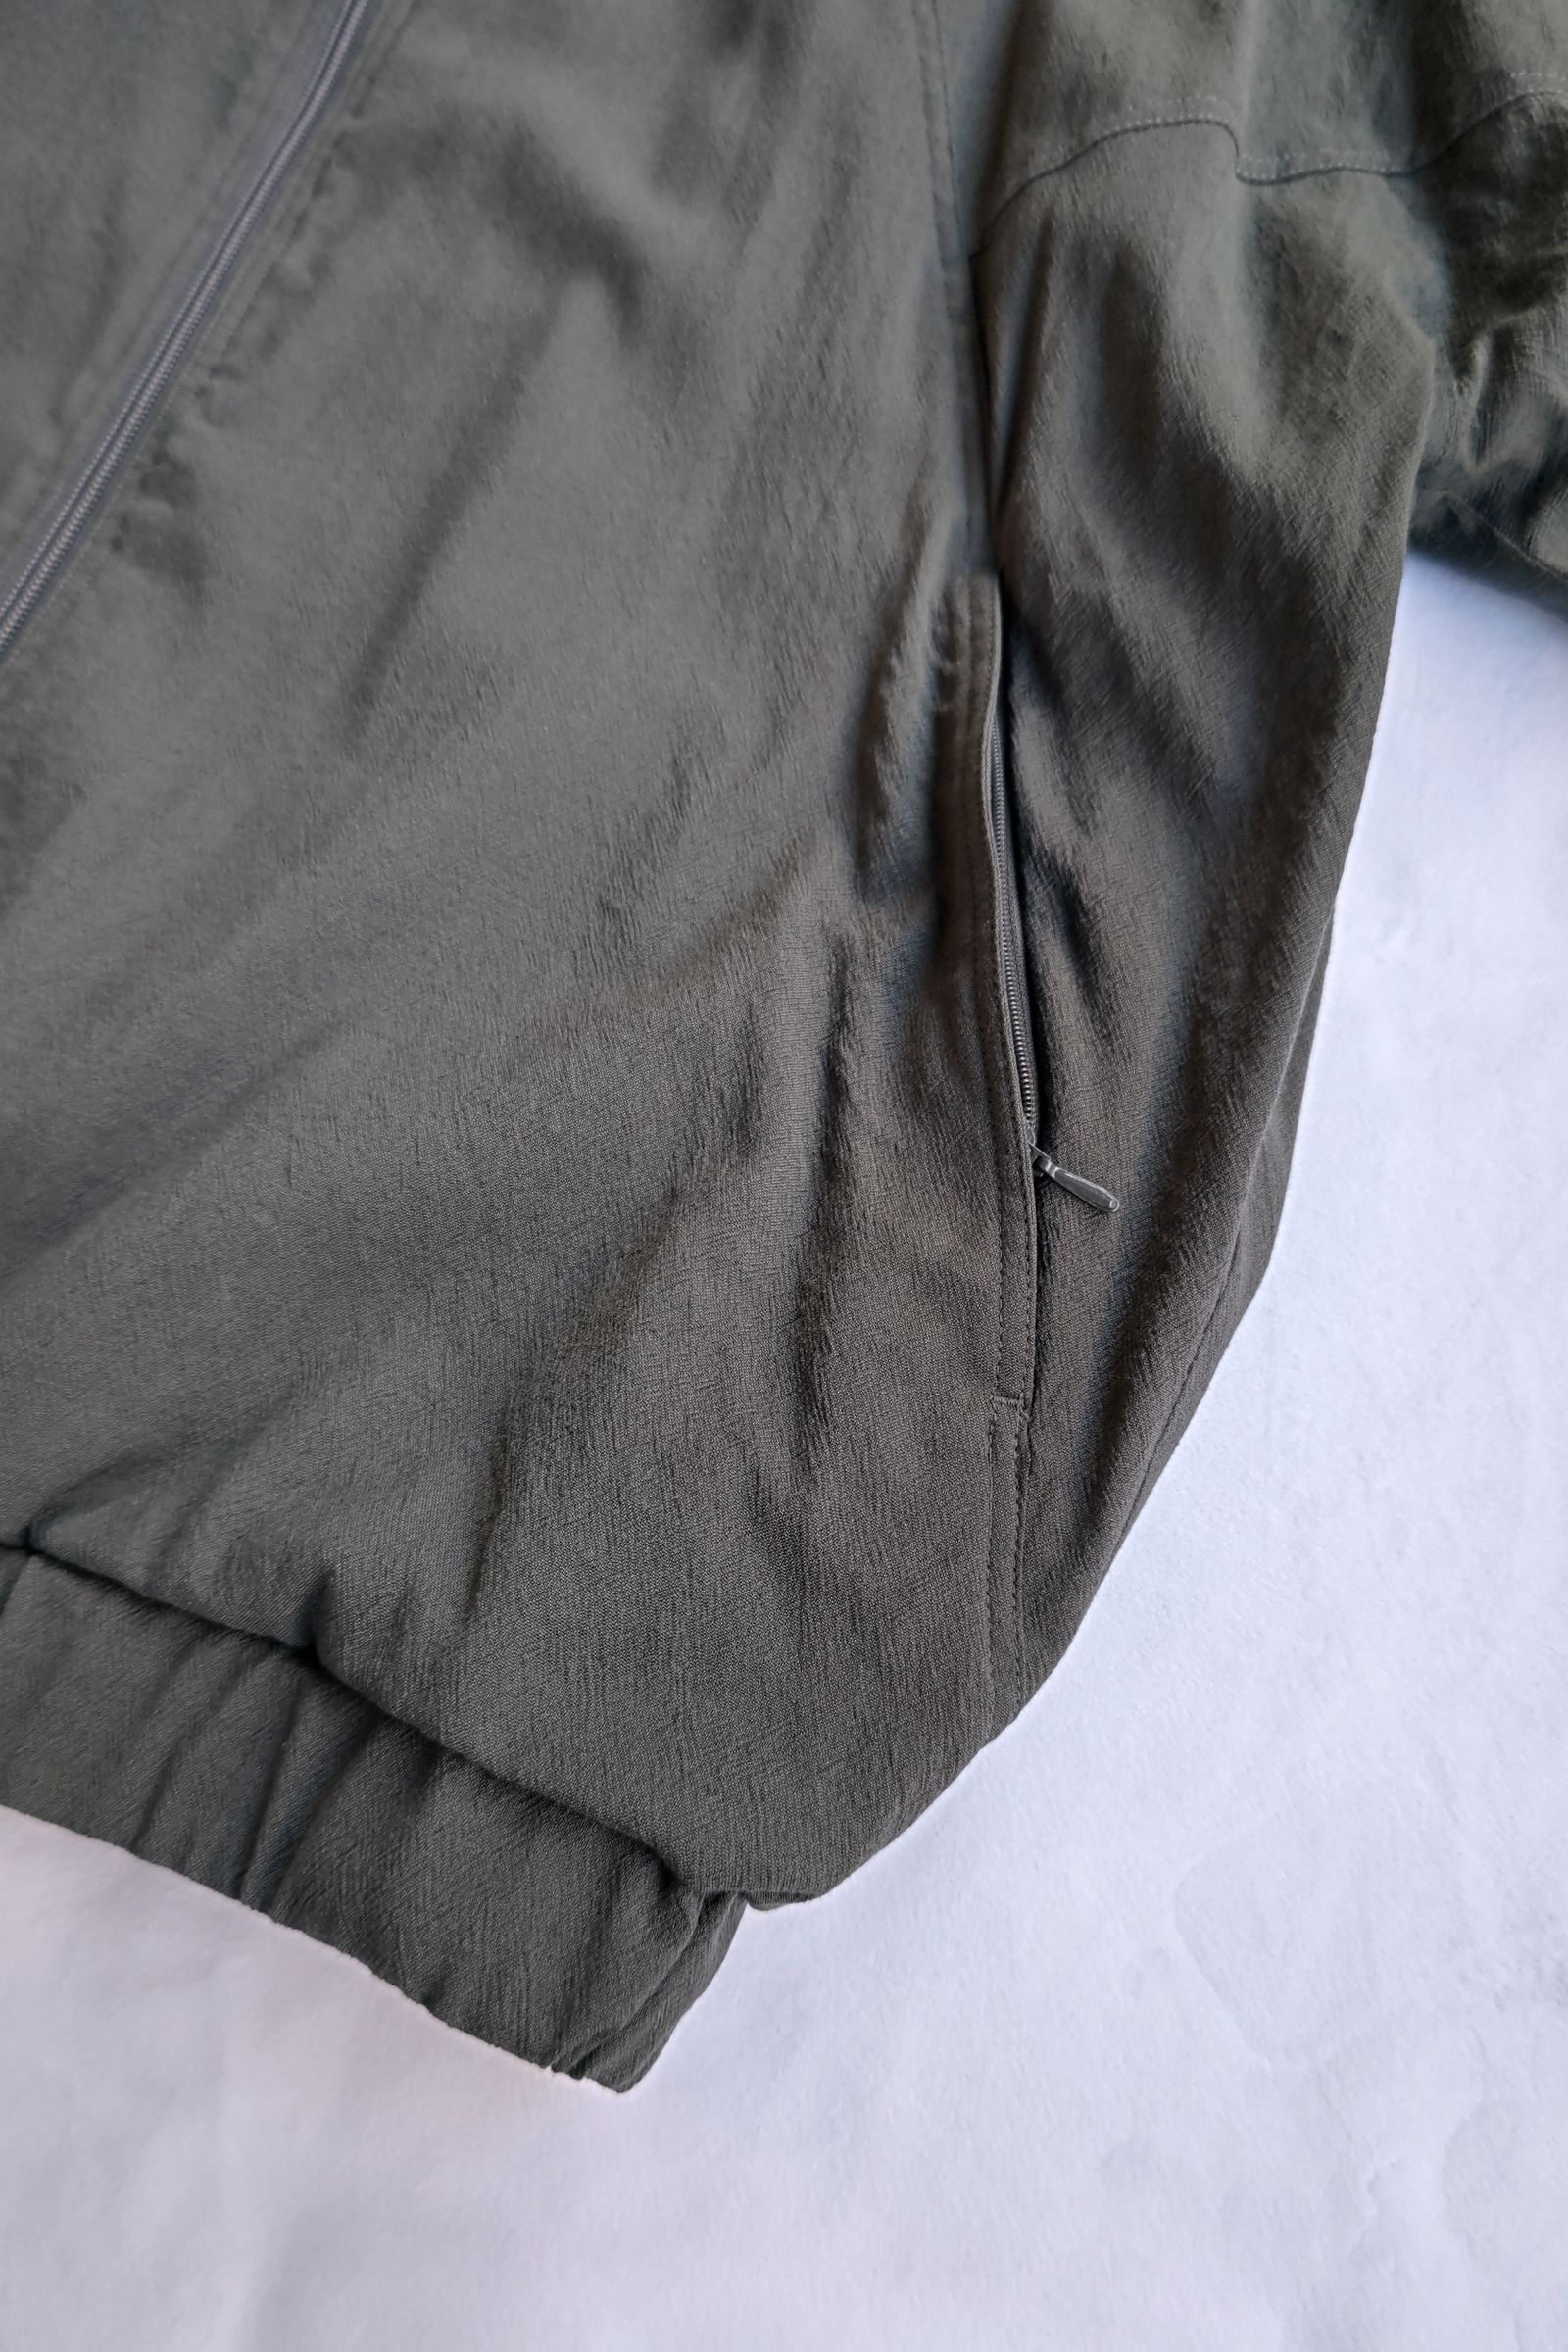 blurhms - Wool Rayon Silk Track Jacket-dark sage- 23ss men | asterisk